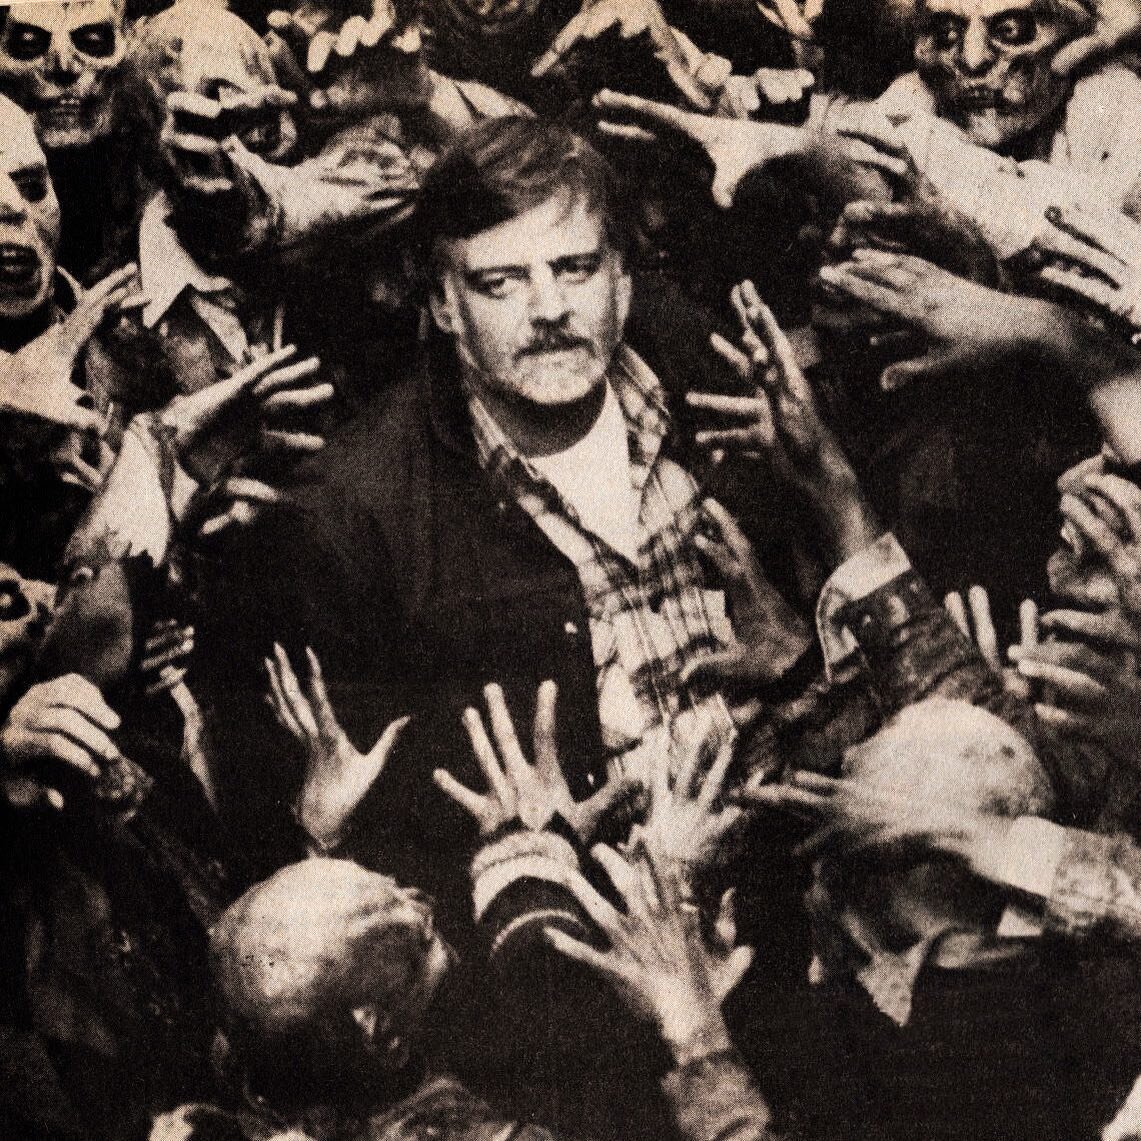 George Romero swarmed by zombies on Day of the Dead (1985) 🧠
.
.
.
.
.
#romero #fantasmahouse #oldschoolhorror #vintagehorror #retrohorror #horrorfilm #horrorfilms #cultfilm #midnightmovie #indiefilm #indiehorror #weirdfilm #retro #vhs #vintage #mon